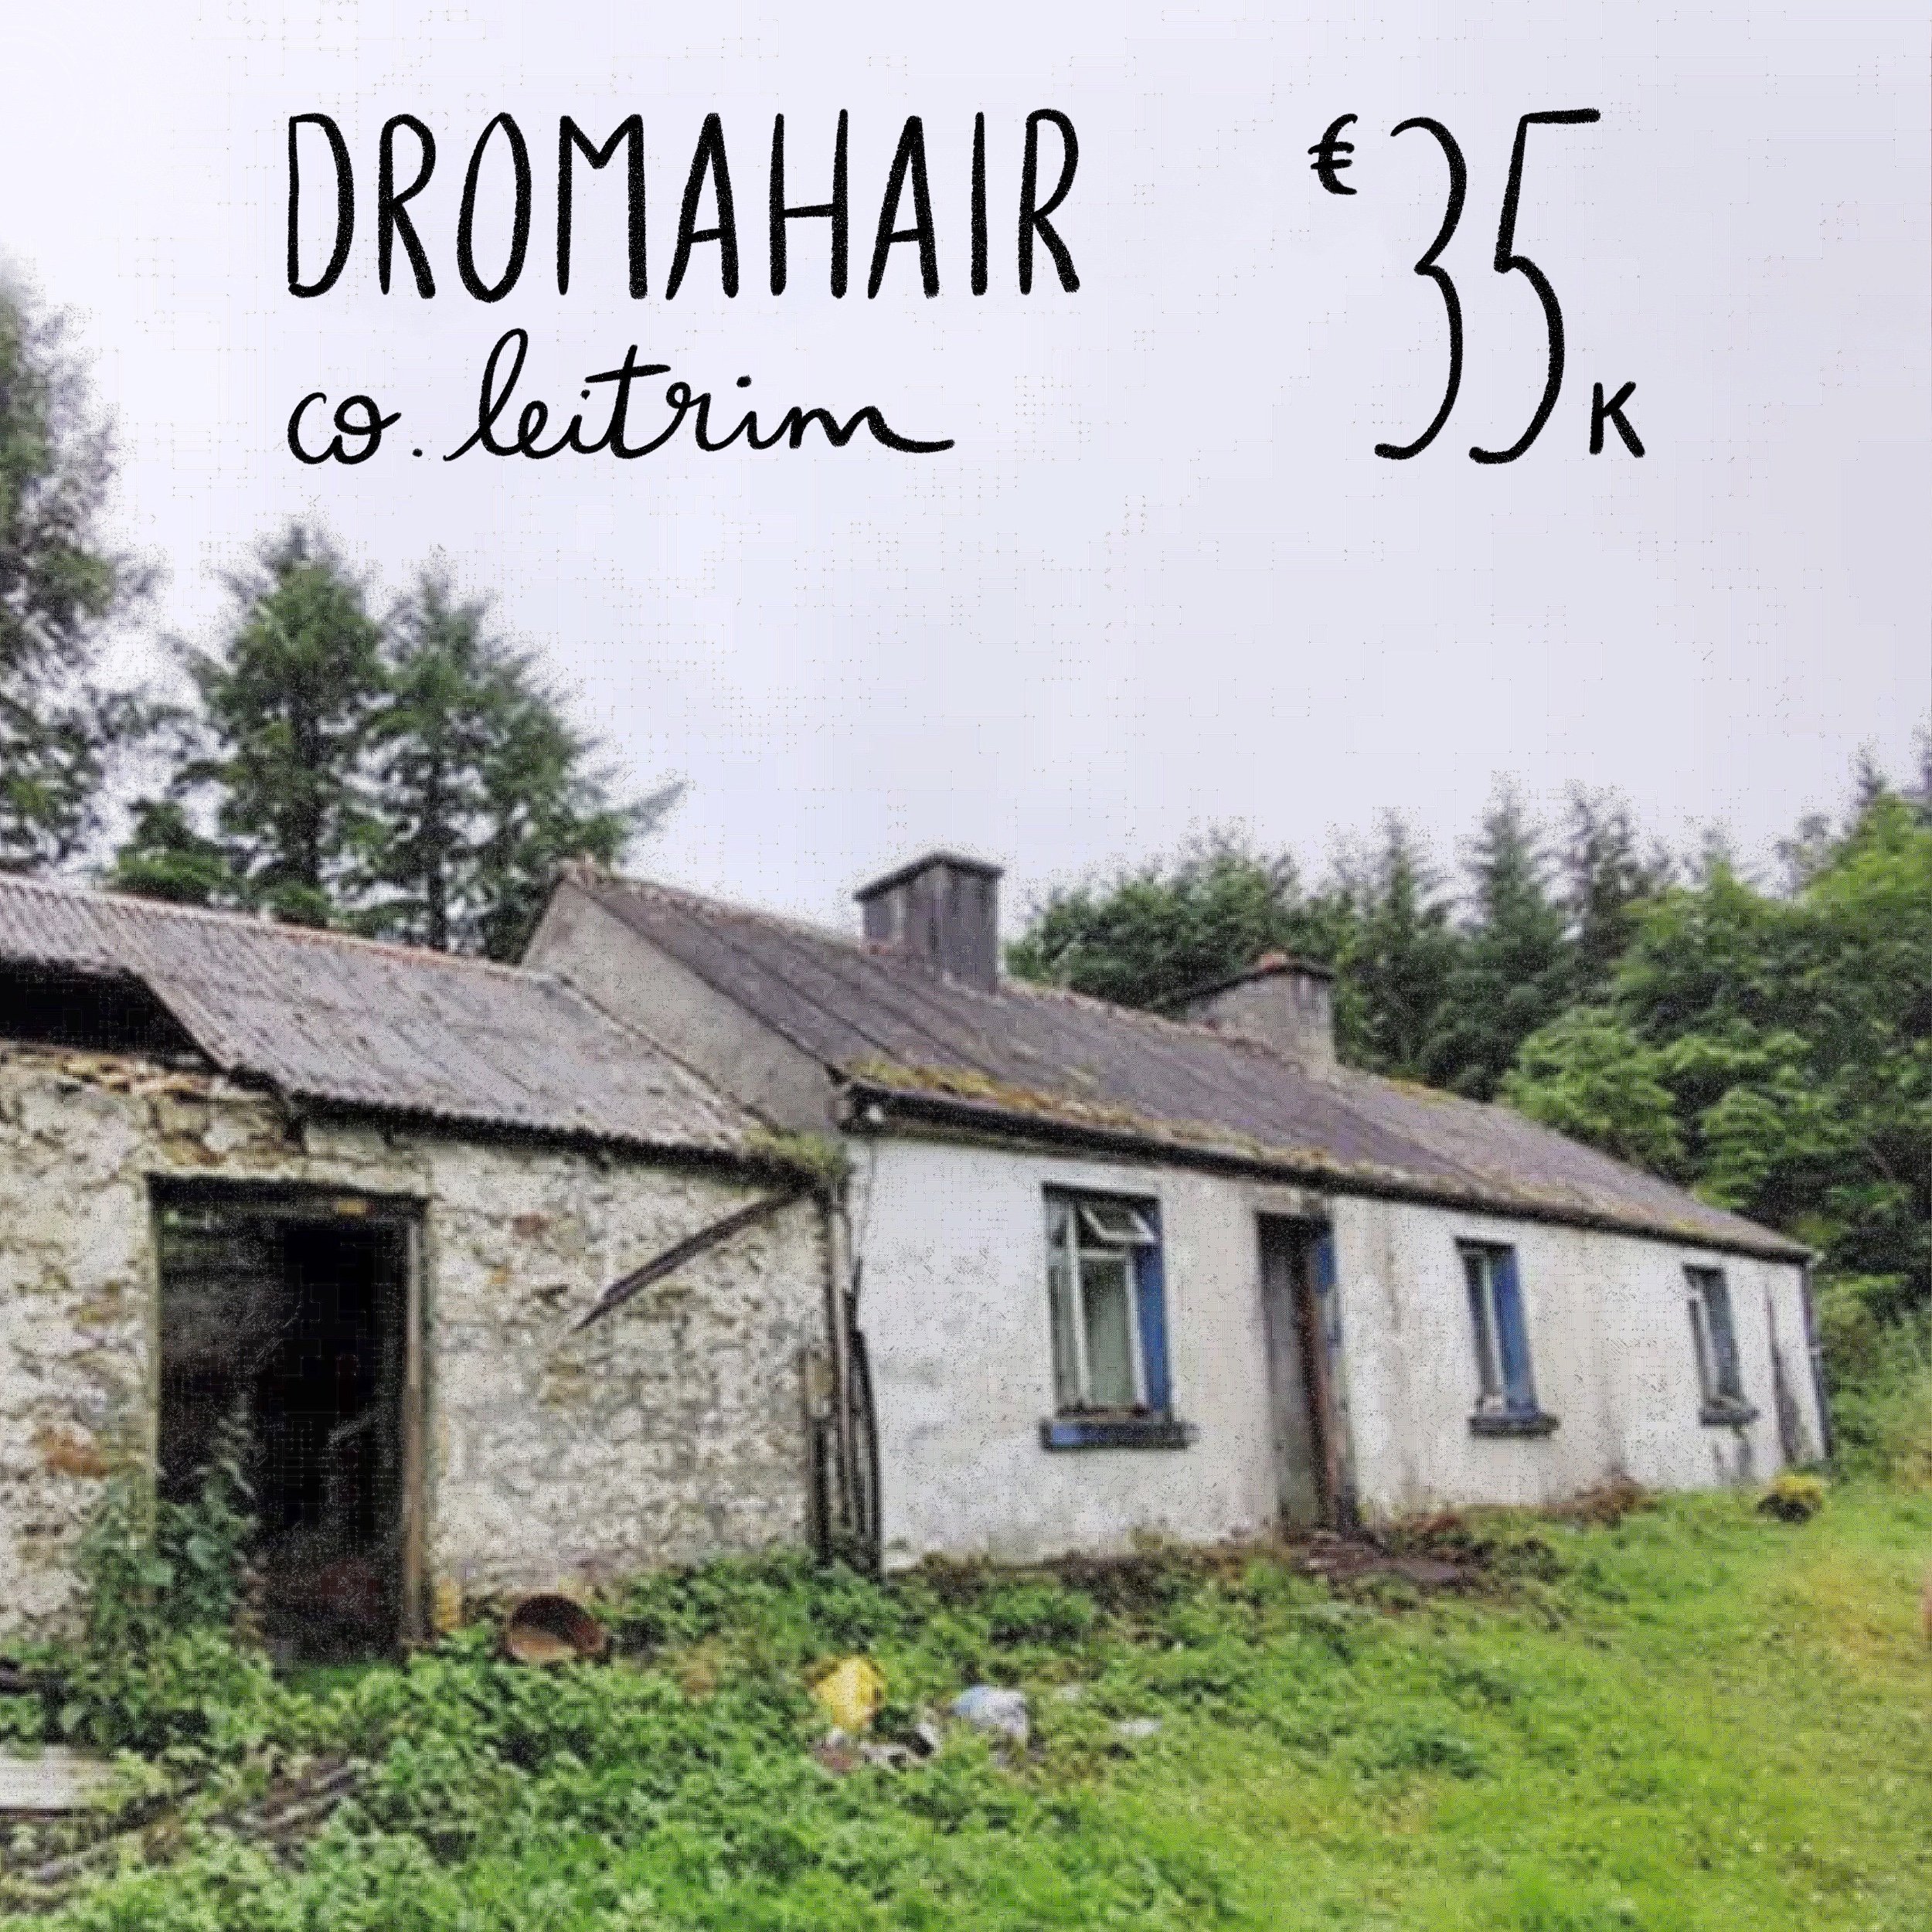 Dromahair, Co. Leitrim. €35k